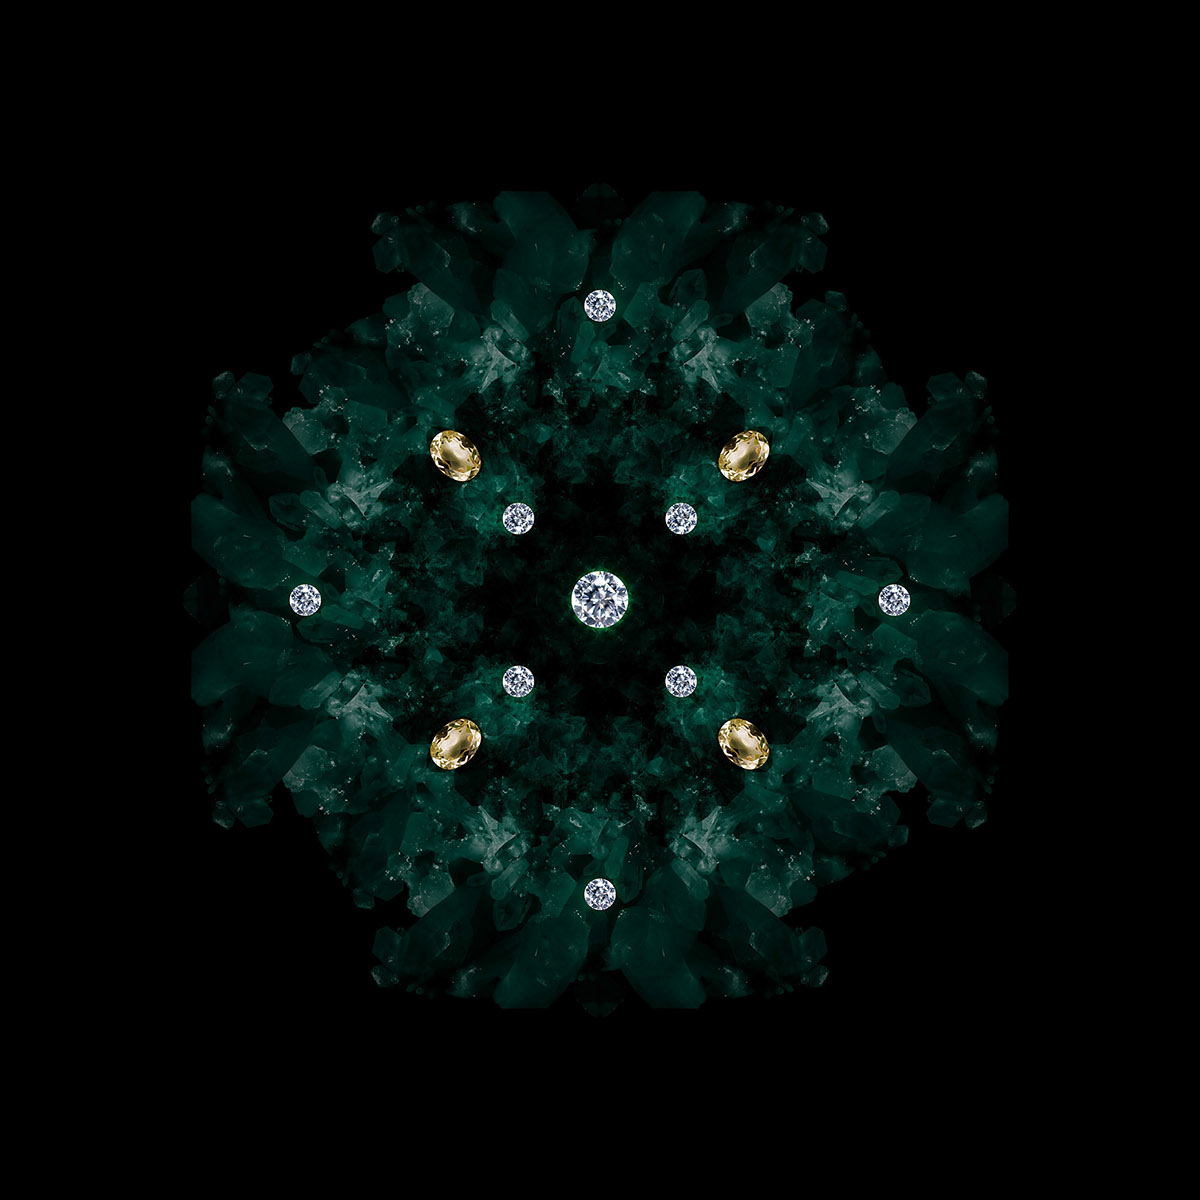 kaleidoscope diamond  emerald gemstone jewelry Mandala design photo-manipulation